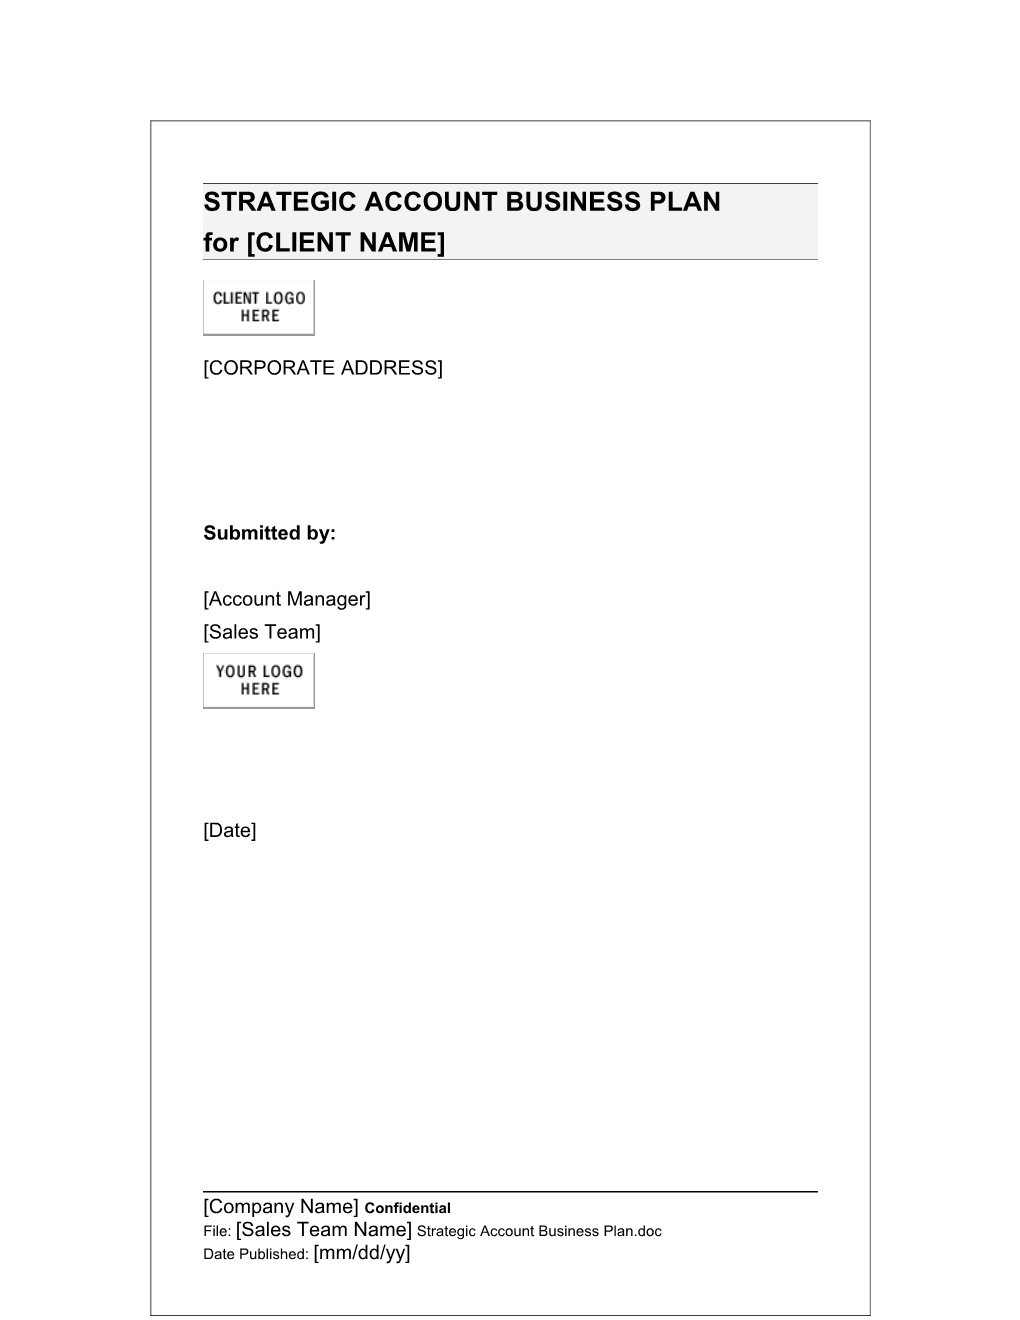 Strategic Account Business Plan